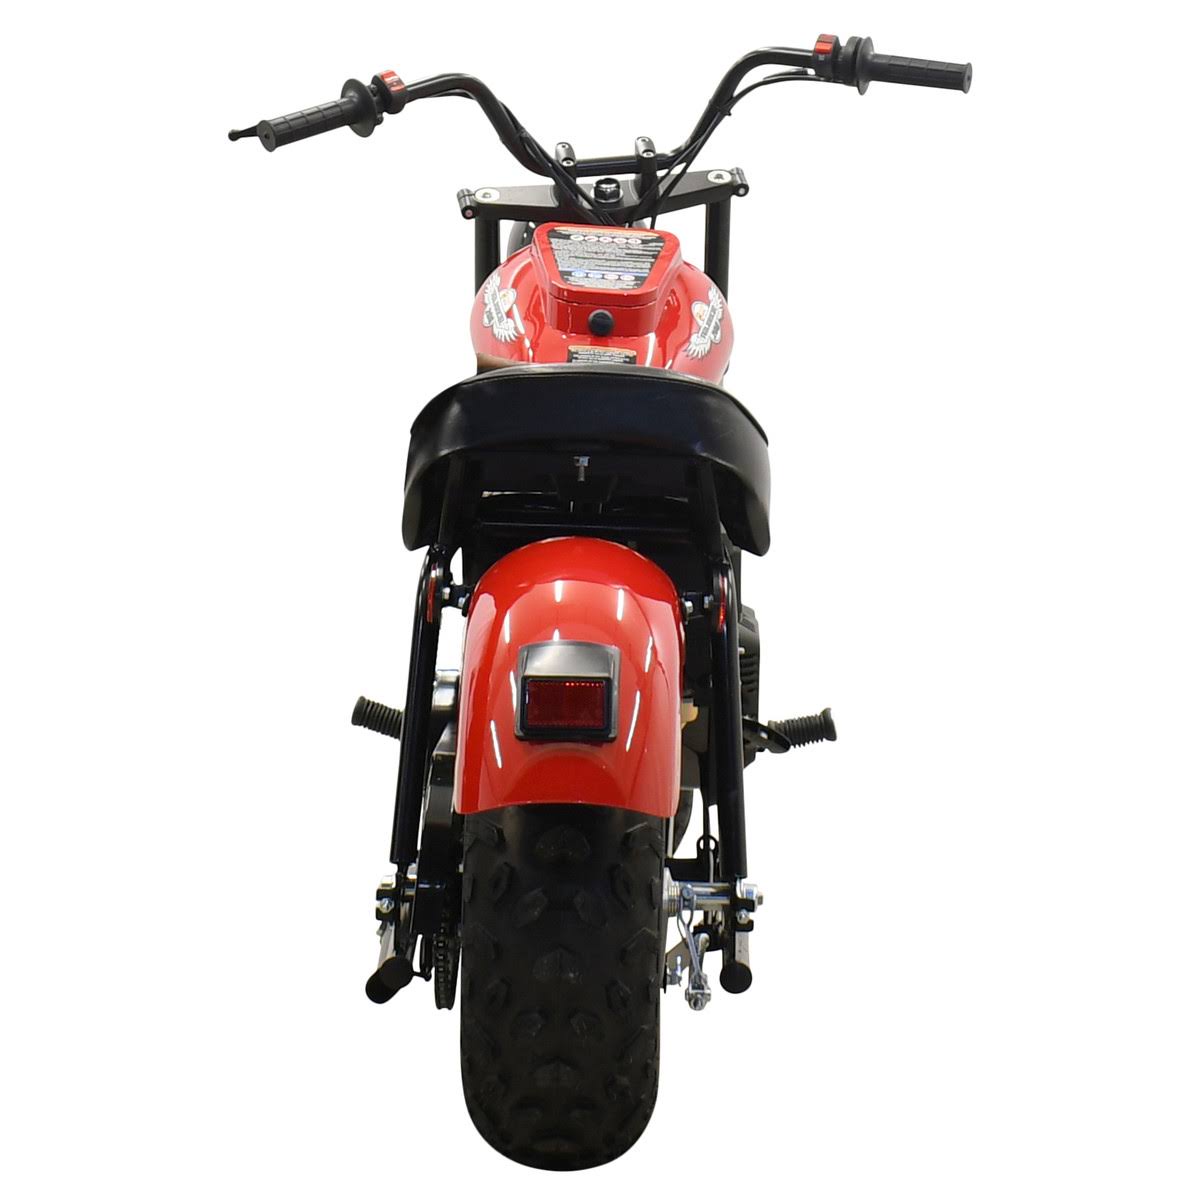 Massimo Mini Bike 200 Motorcycle (Red)